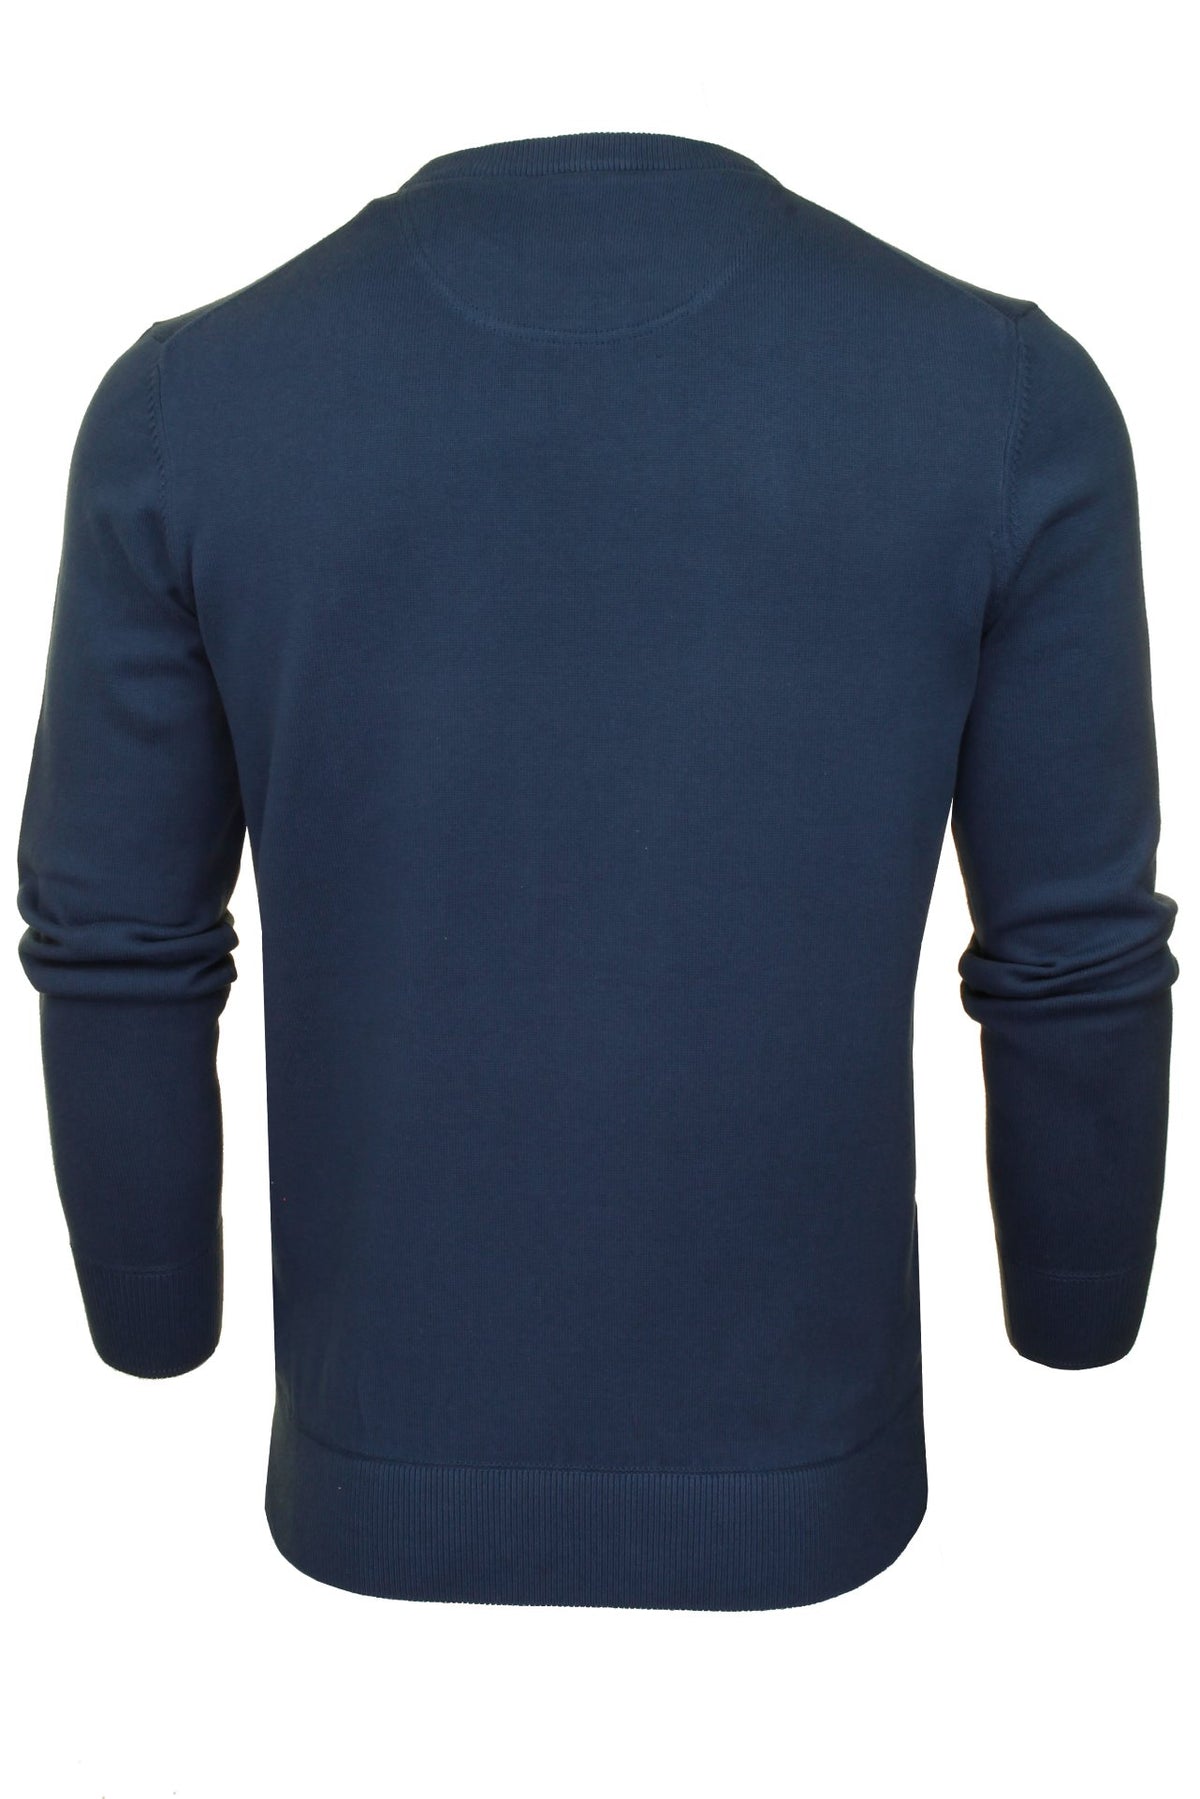 Timberland Mens Jumper 'Williams River Cotton Crew Sweater' - Long Sleeved, 03, Tb0A2Bmm, Dark Denim